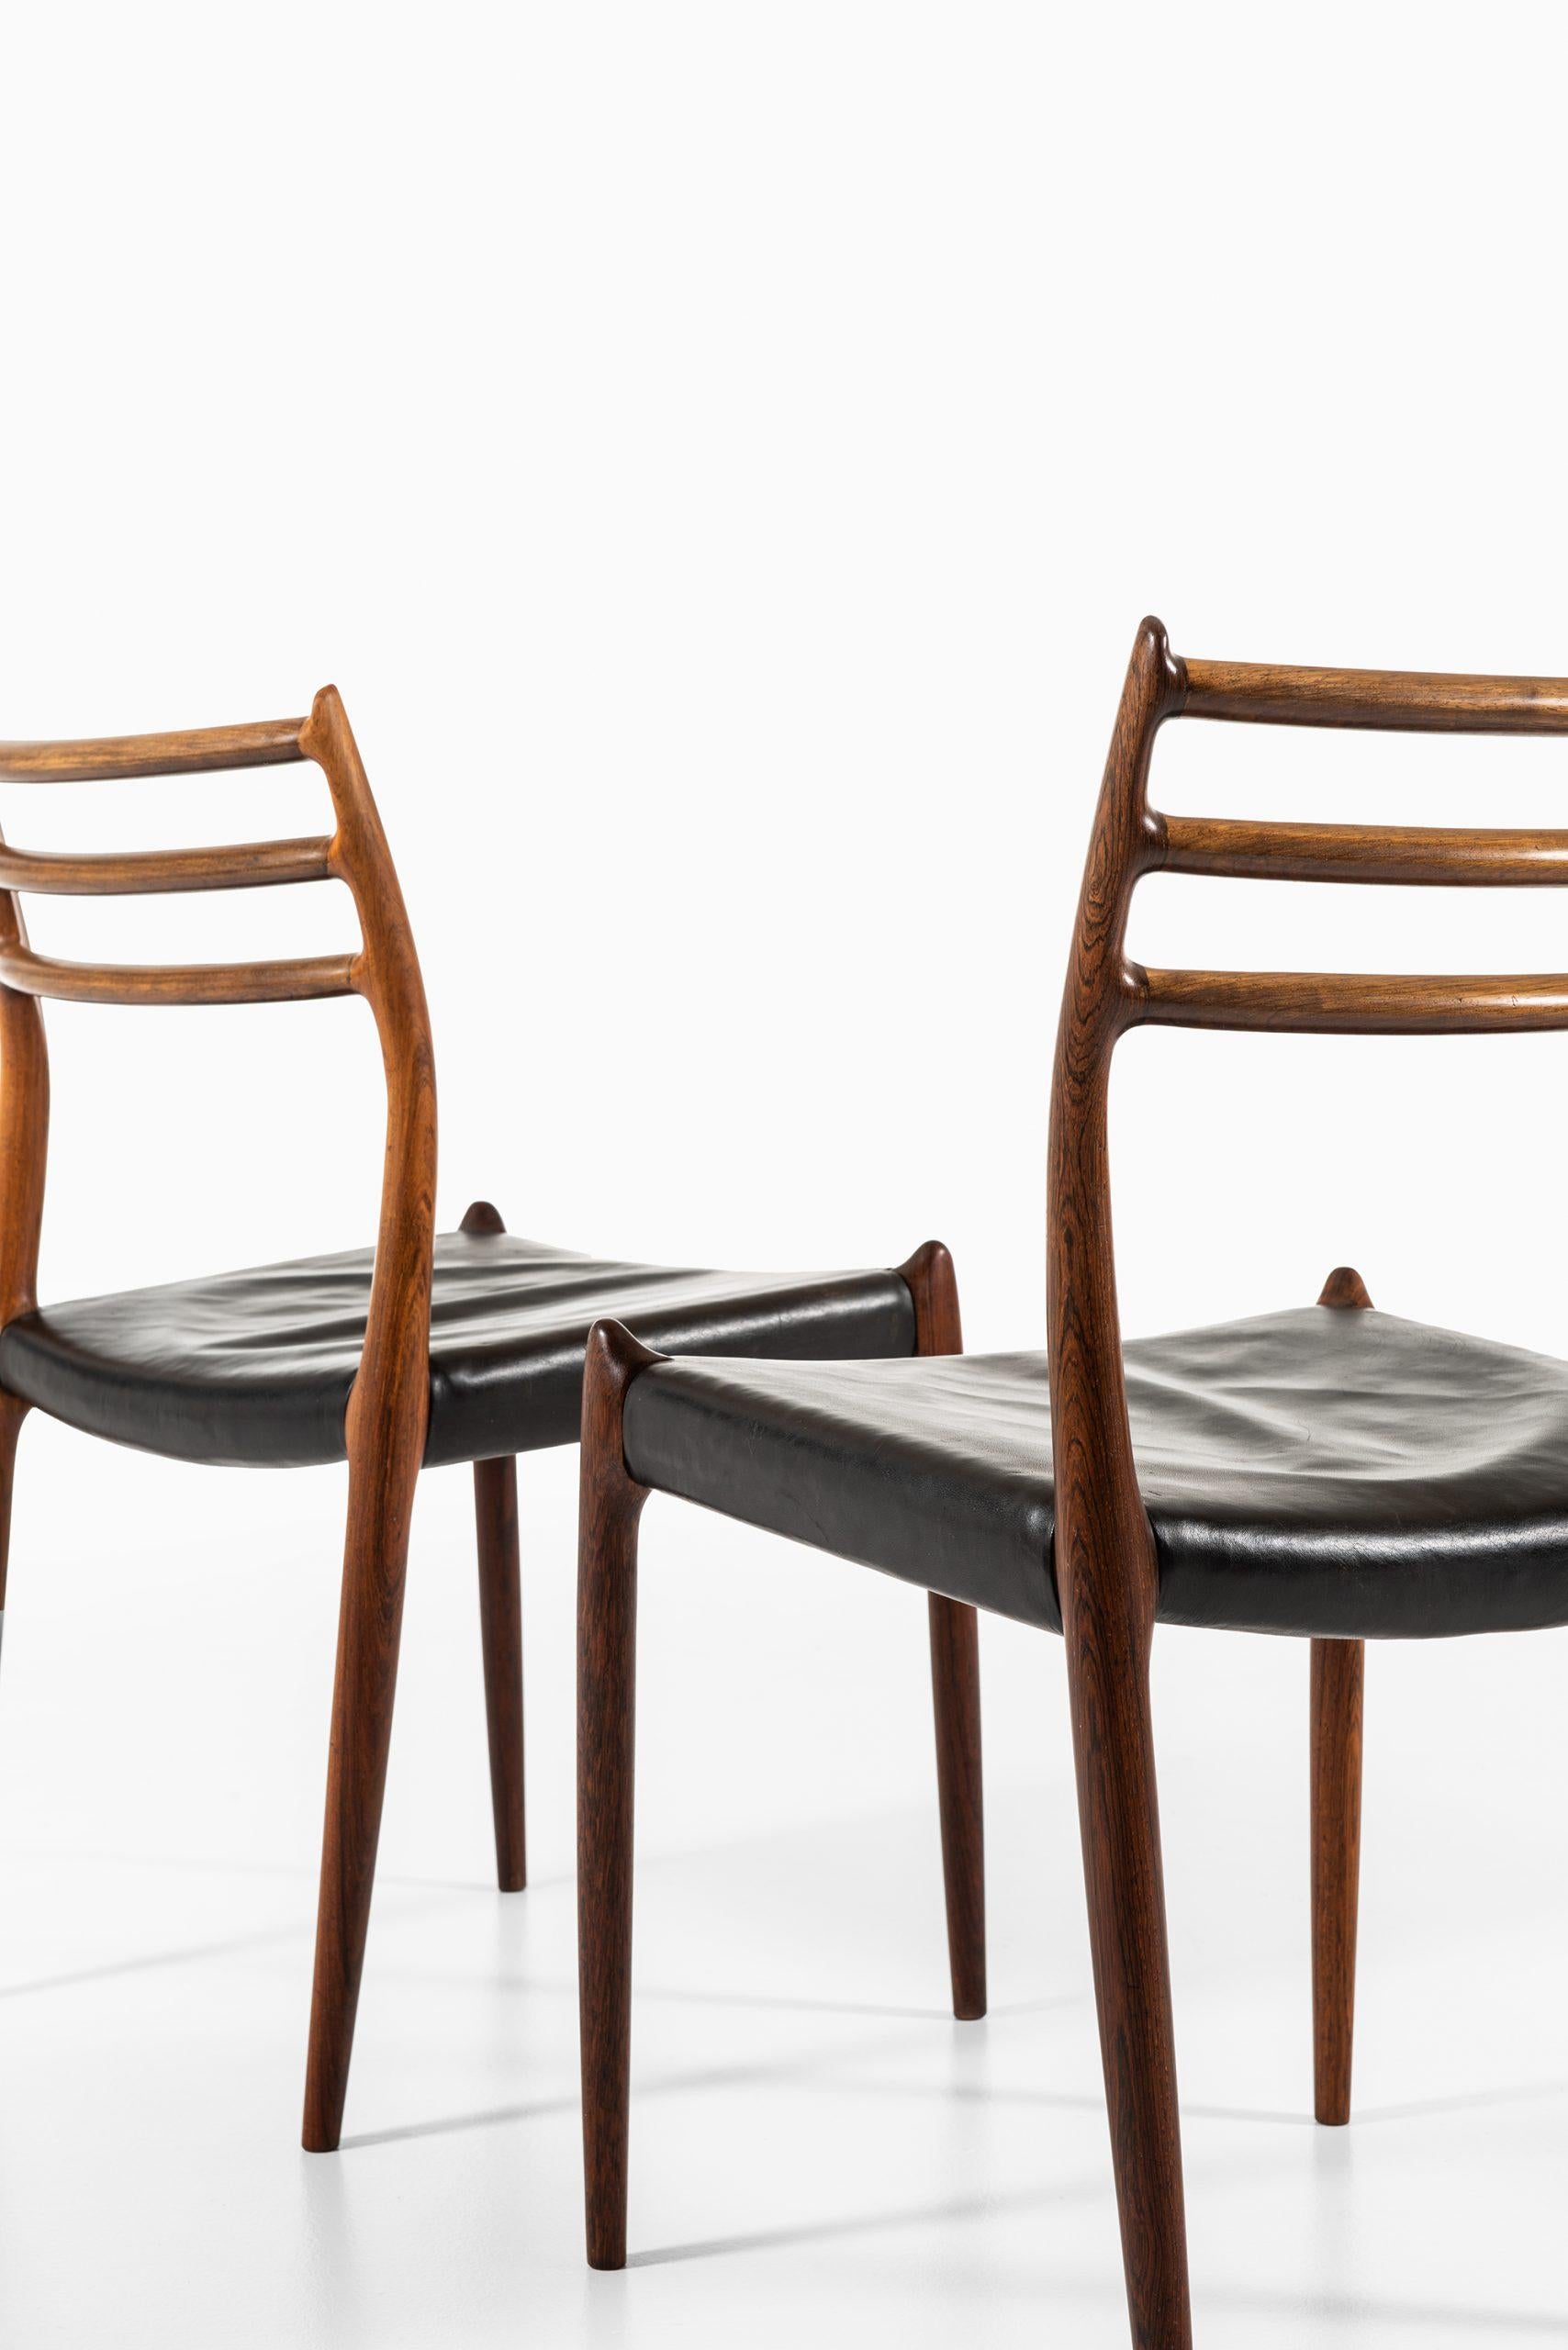 Leather Niels O. Møller Dining Chairs Model 78 by J.L Møllers Møbelfabrik in Denmark